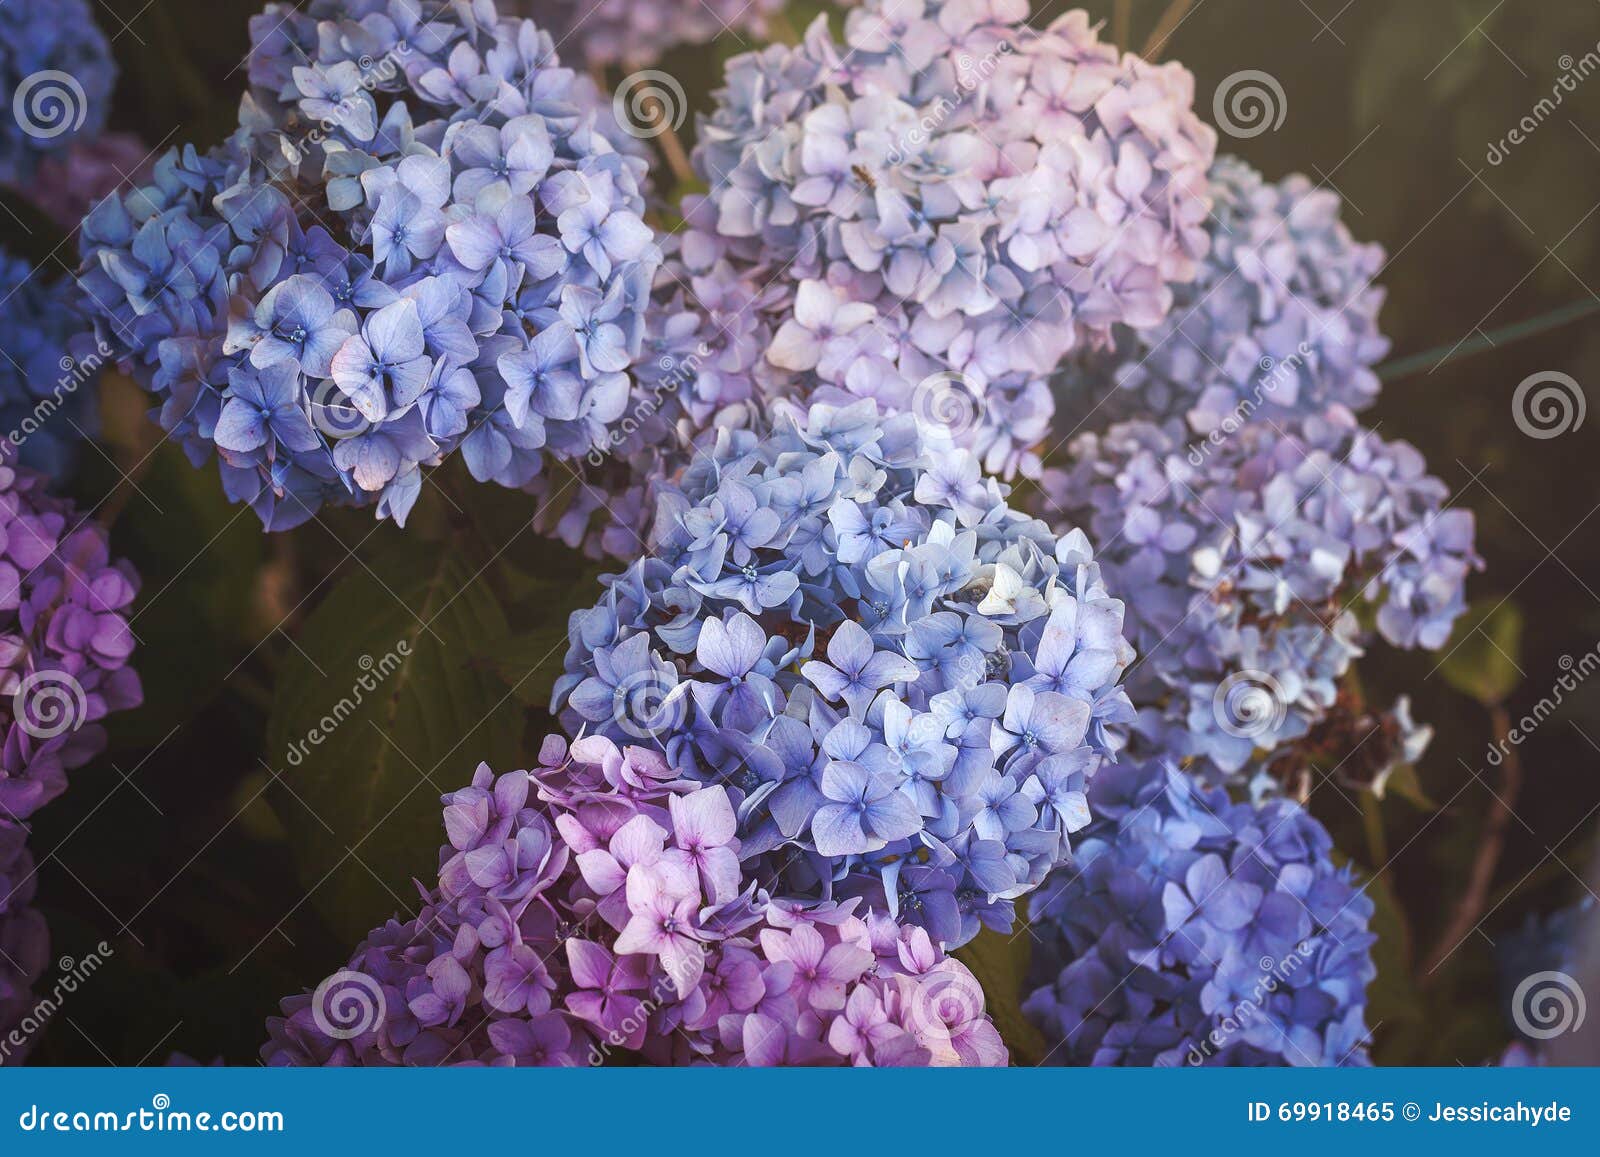 Blue, Purple and Pink Hydrangea Stock Image - Image of garden, himalaya ...